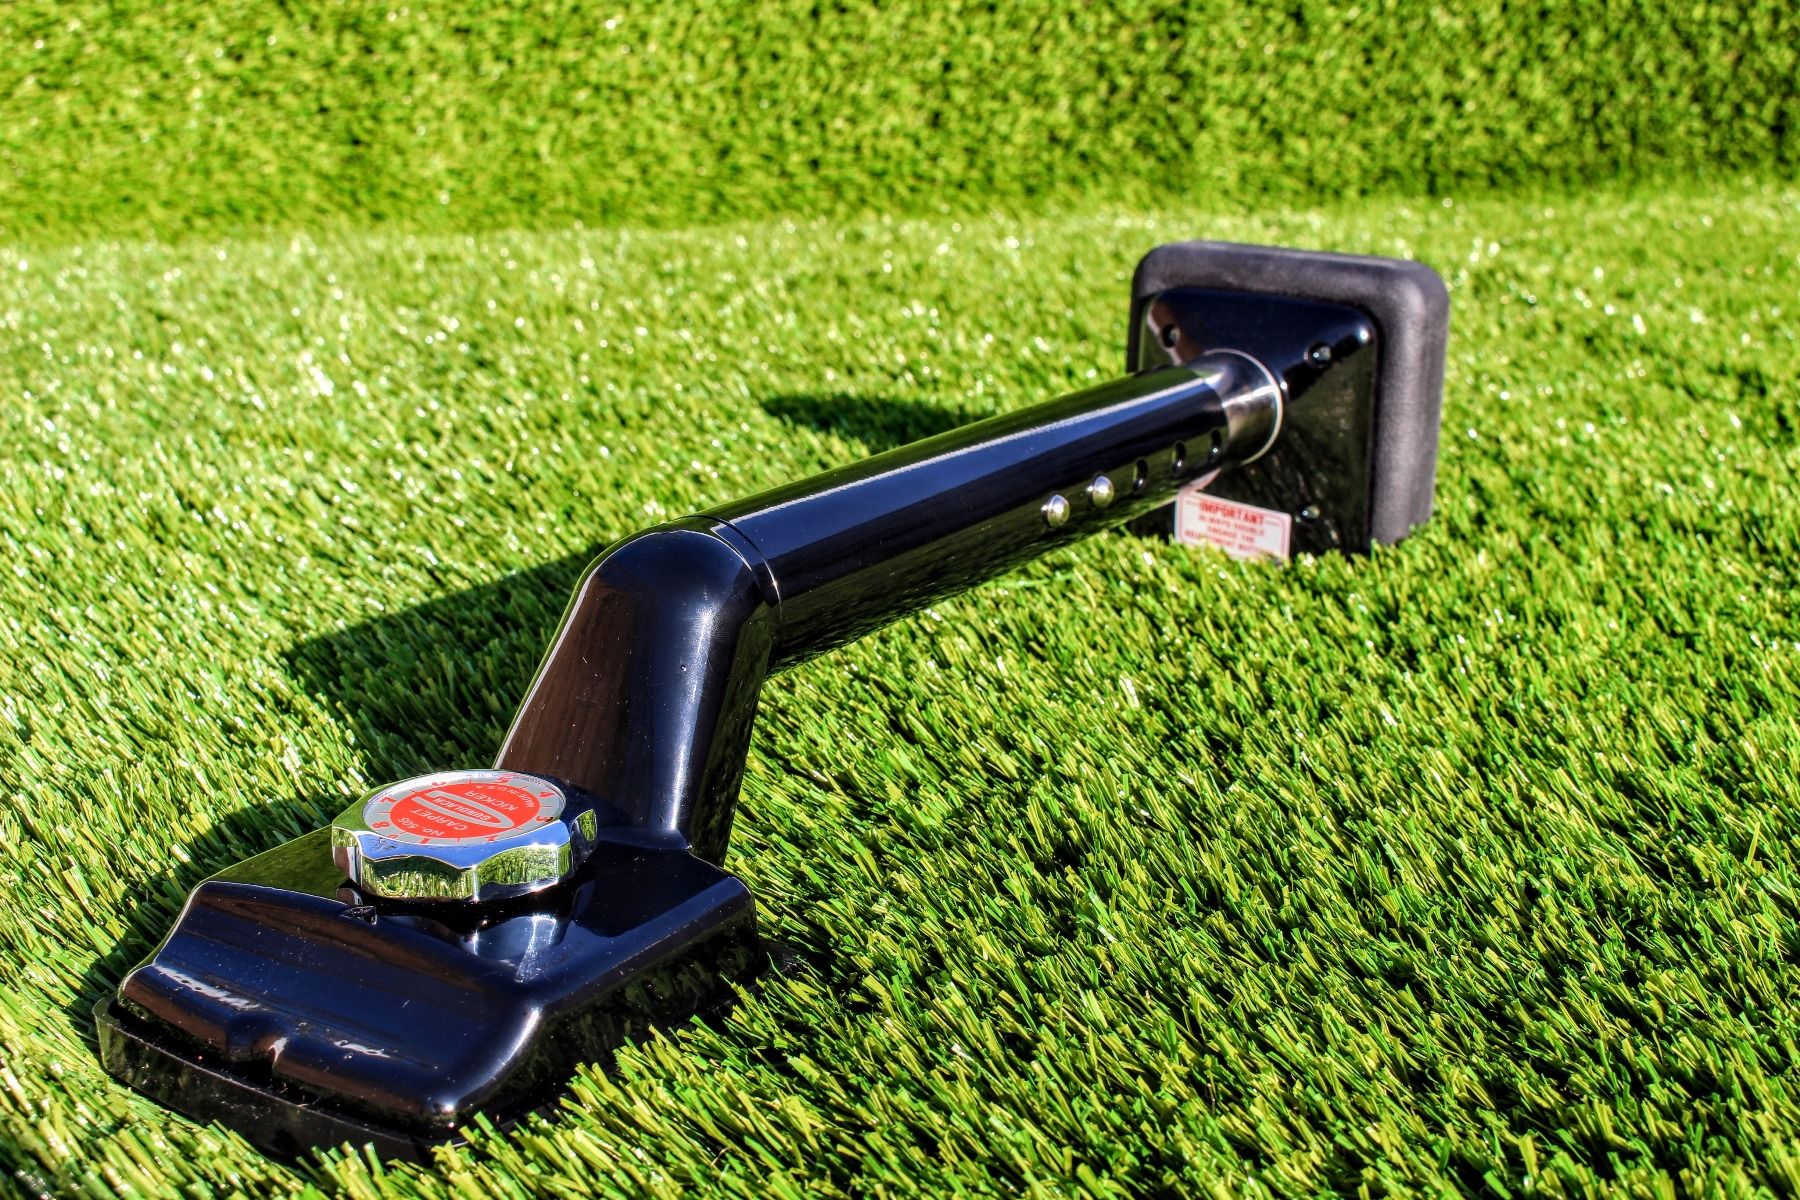 Carpet Kicker Deluxe  Shop Purchase Green Artificial Grass